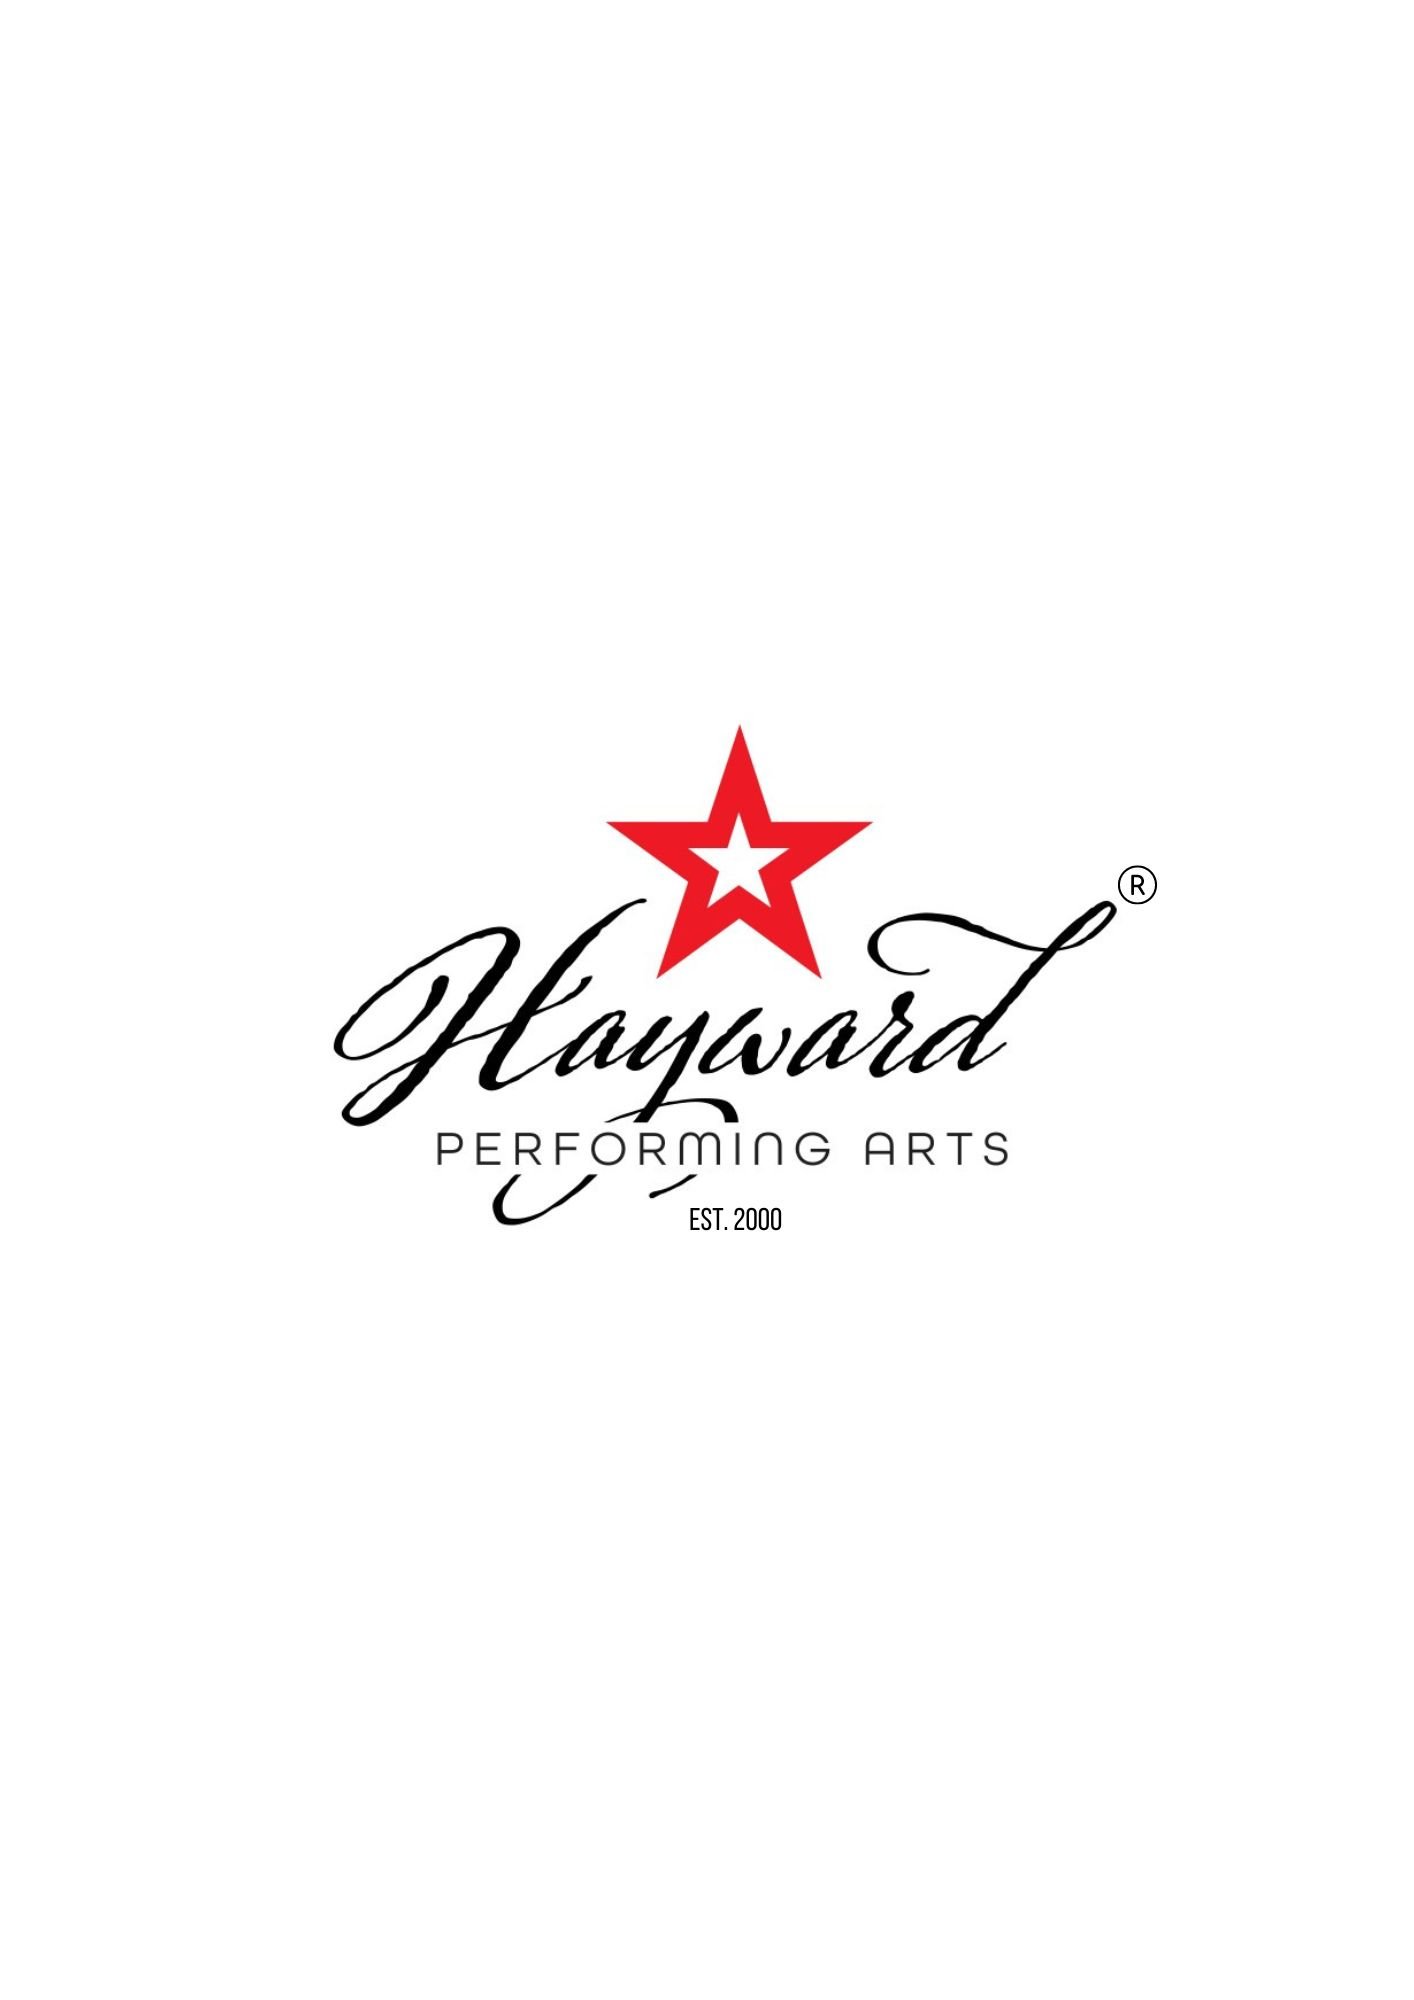 Hayward Performing Arts - Dance School logo